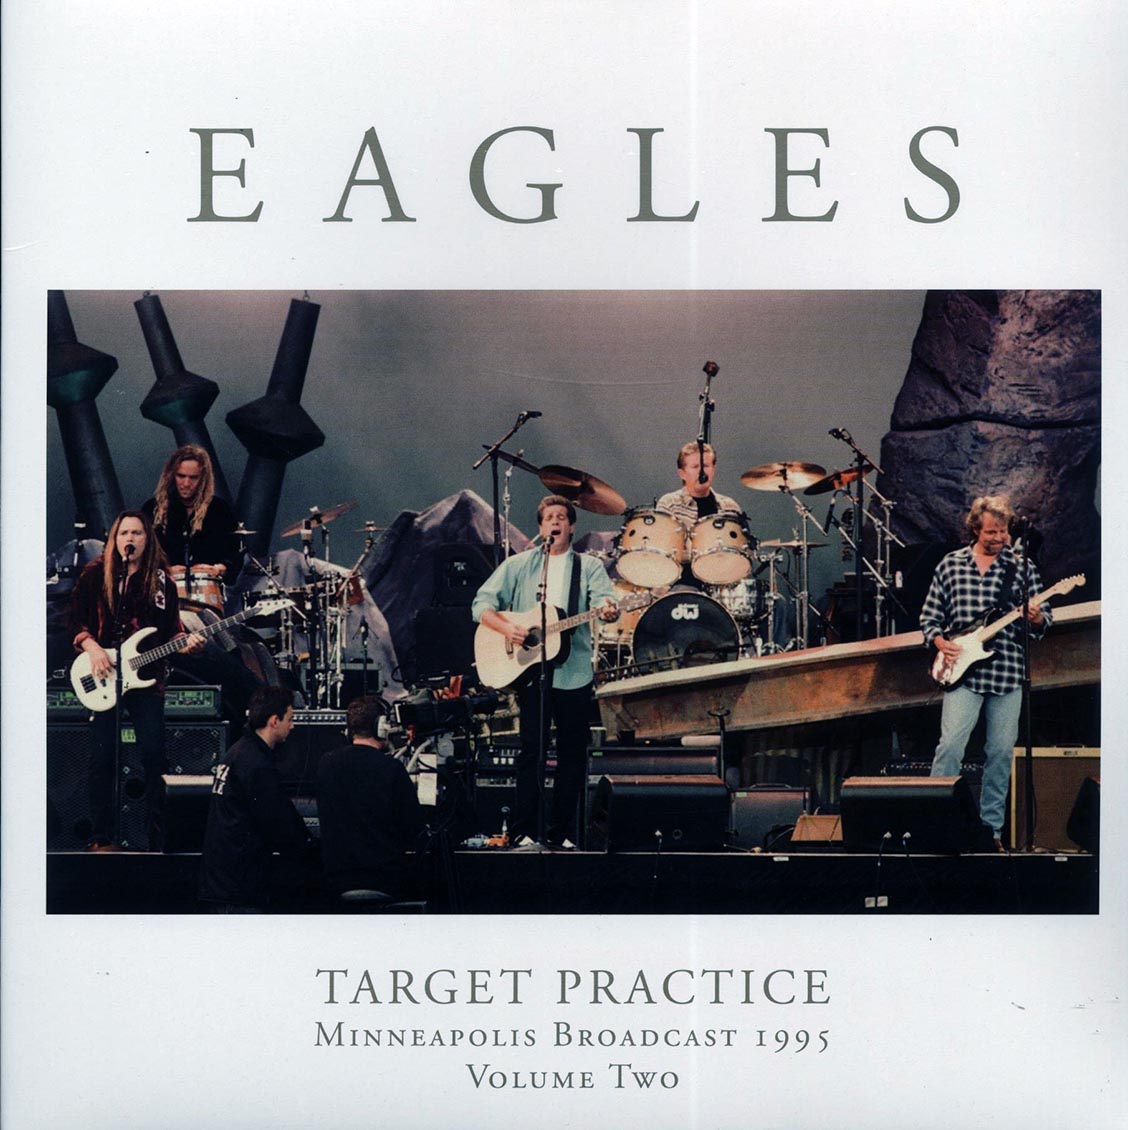 Eagles - Target Practice Volume 2: Minneapolis Broadcast 1995 (ltd. ed.) (2xLP) - Vinyl LP